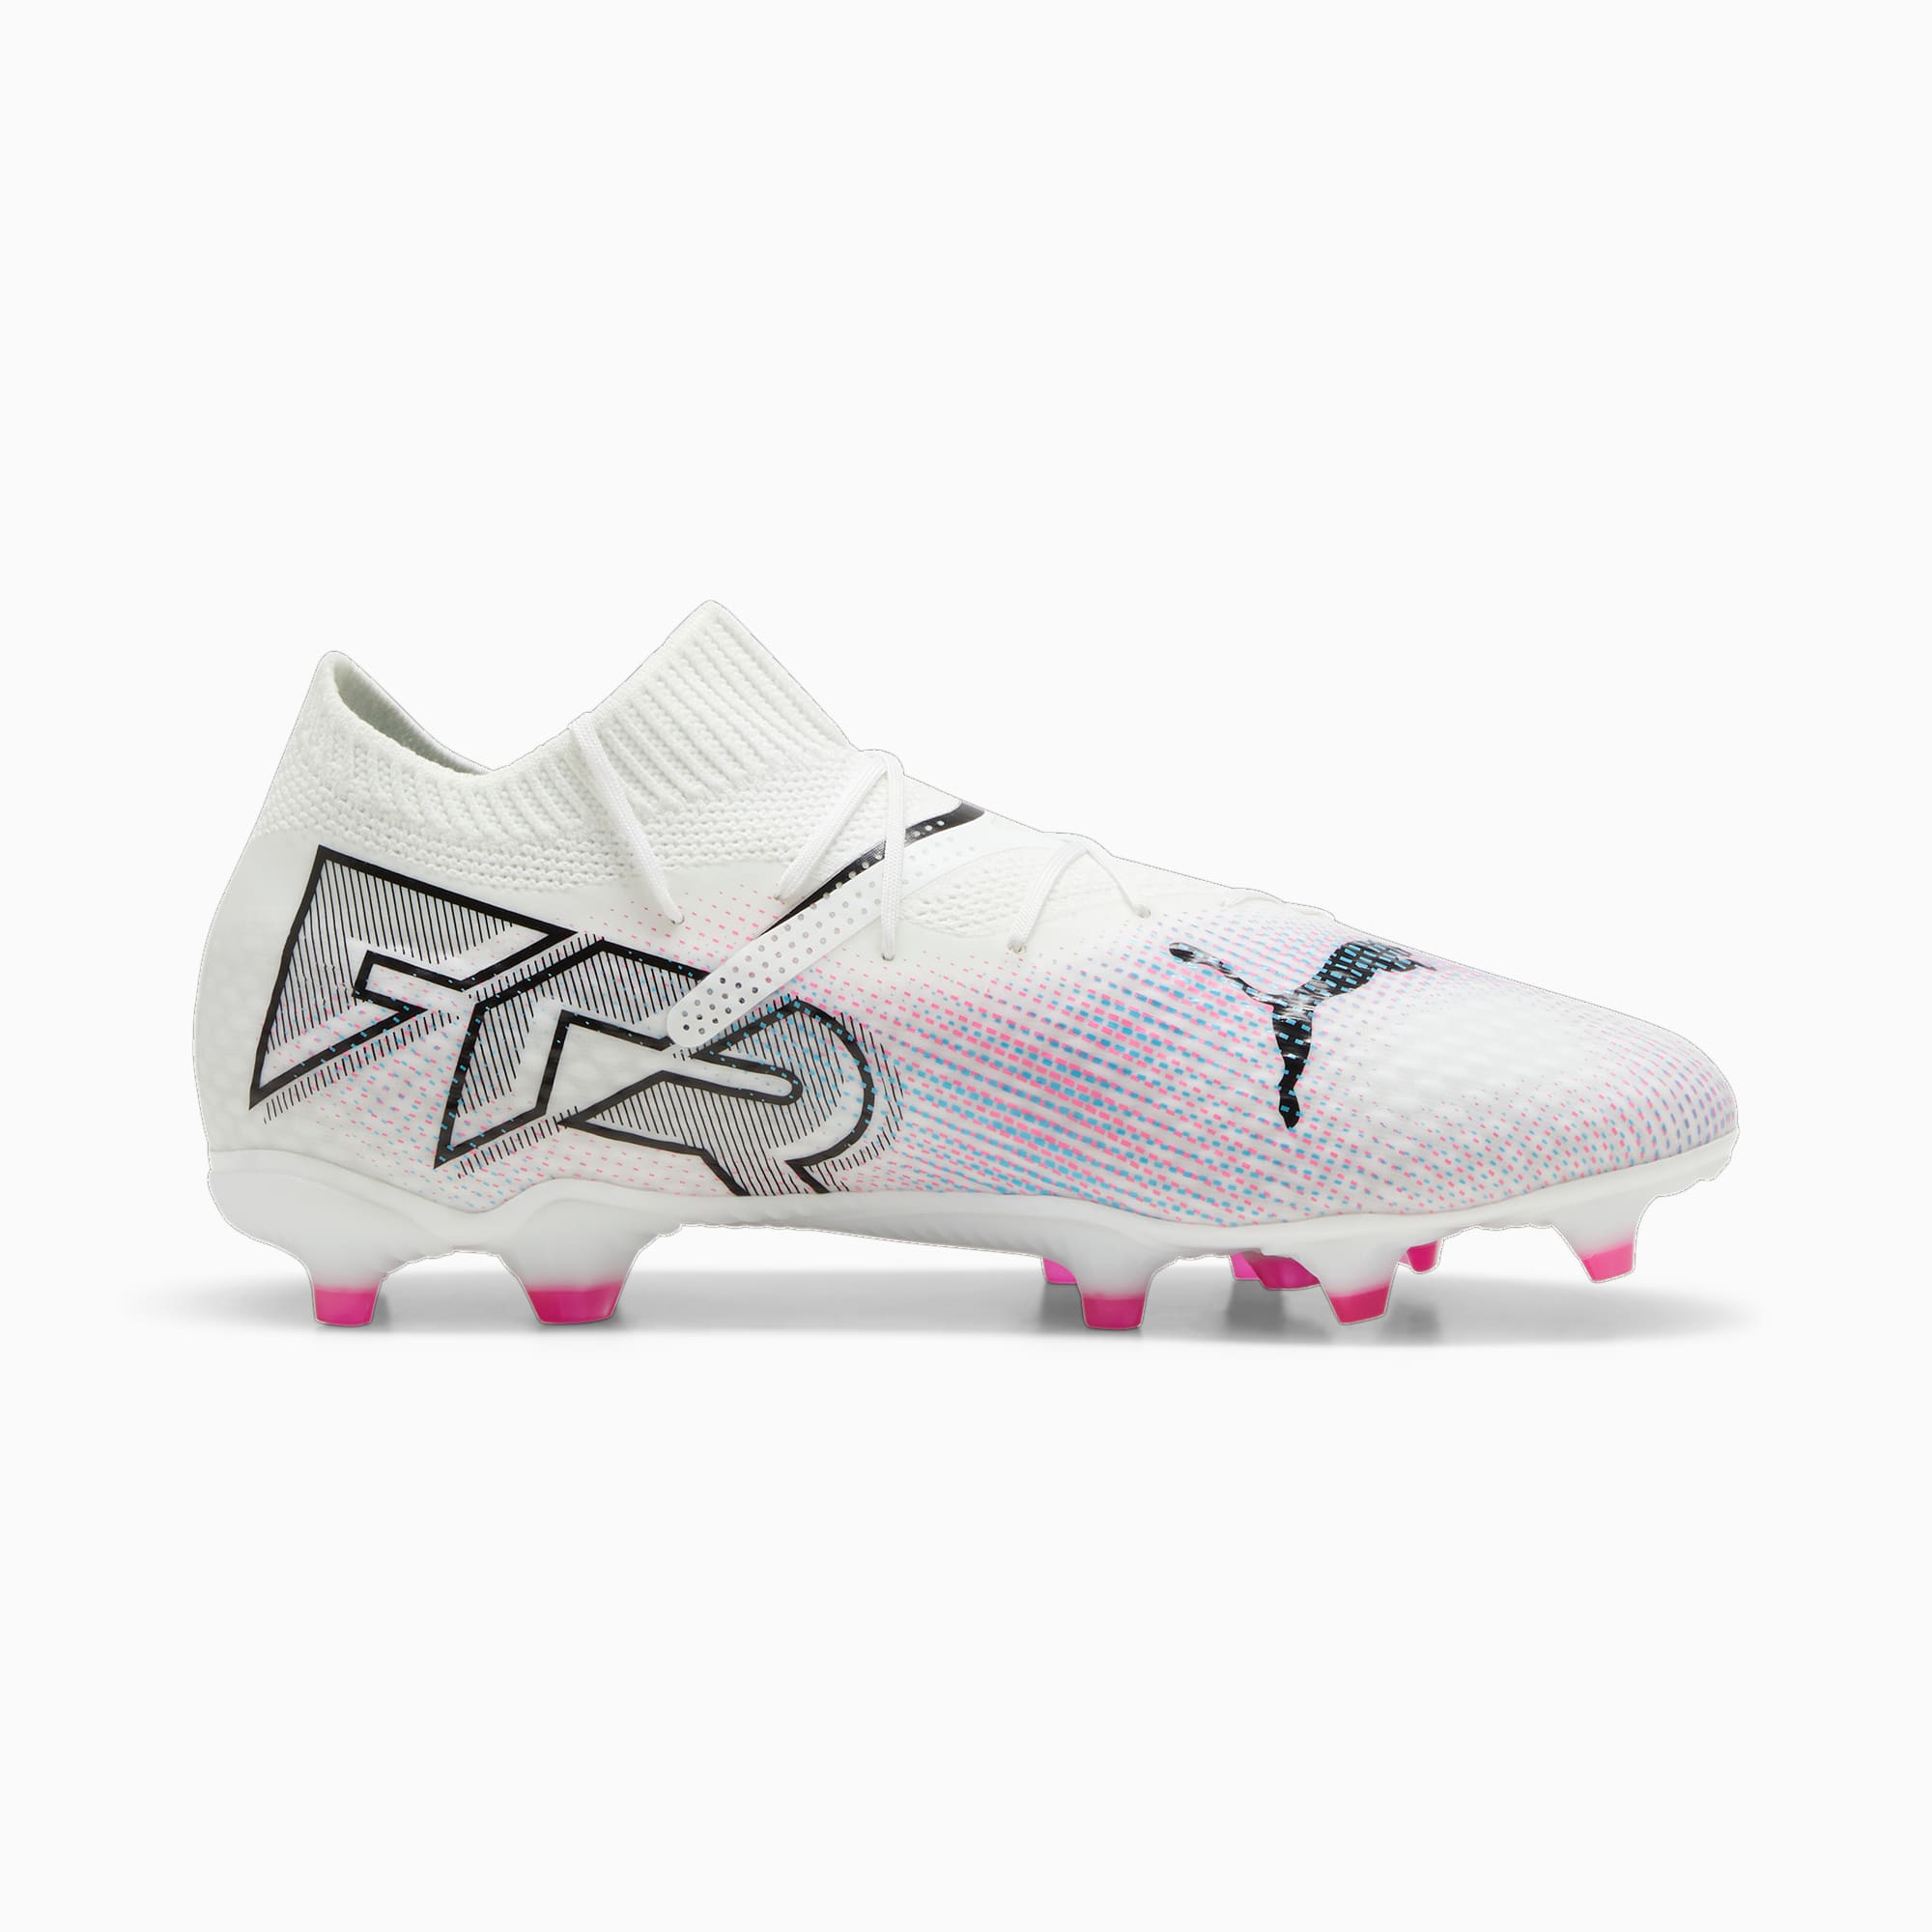 Men's PUMA Future 7 Pro FG/AG Football Boots, White/Black/Poison Pink